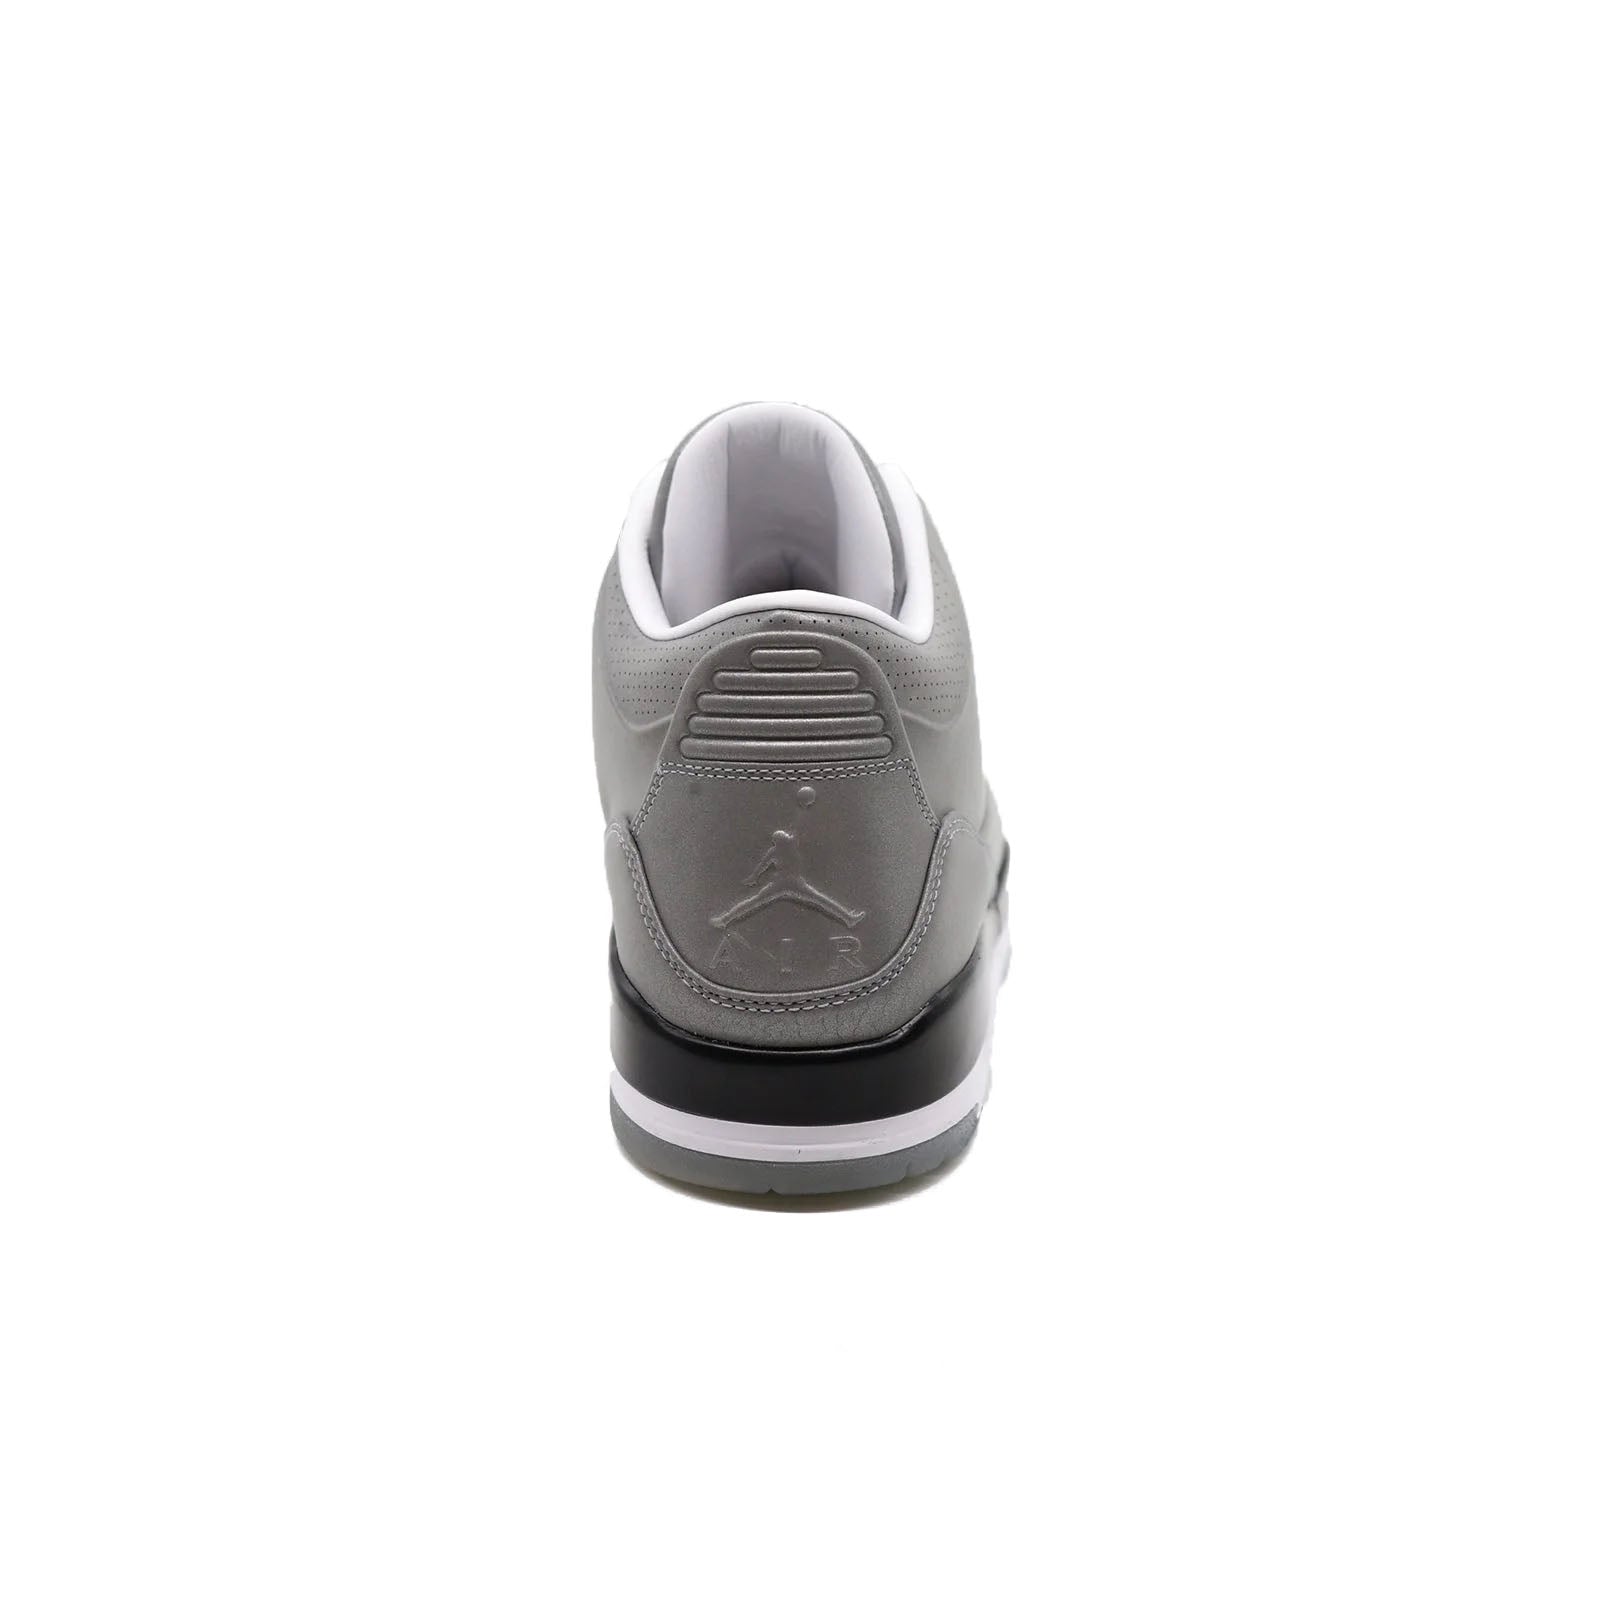 Air Jordan 3, 5Lab3 Reflective Silver